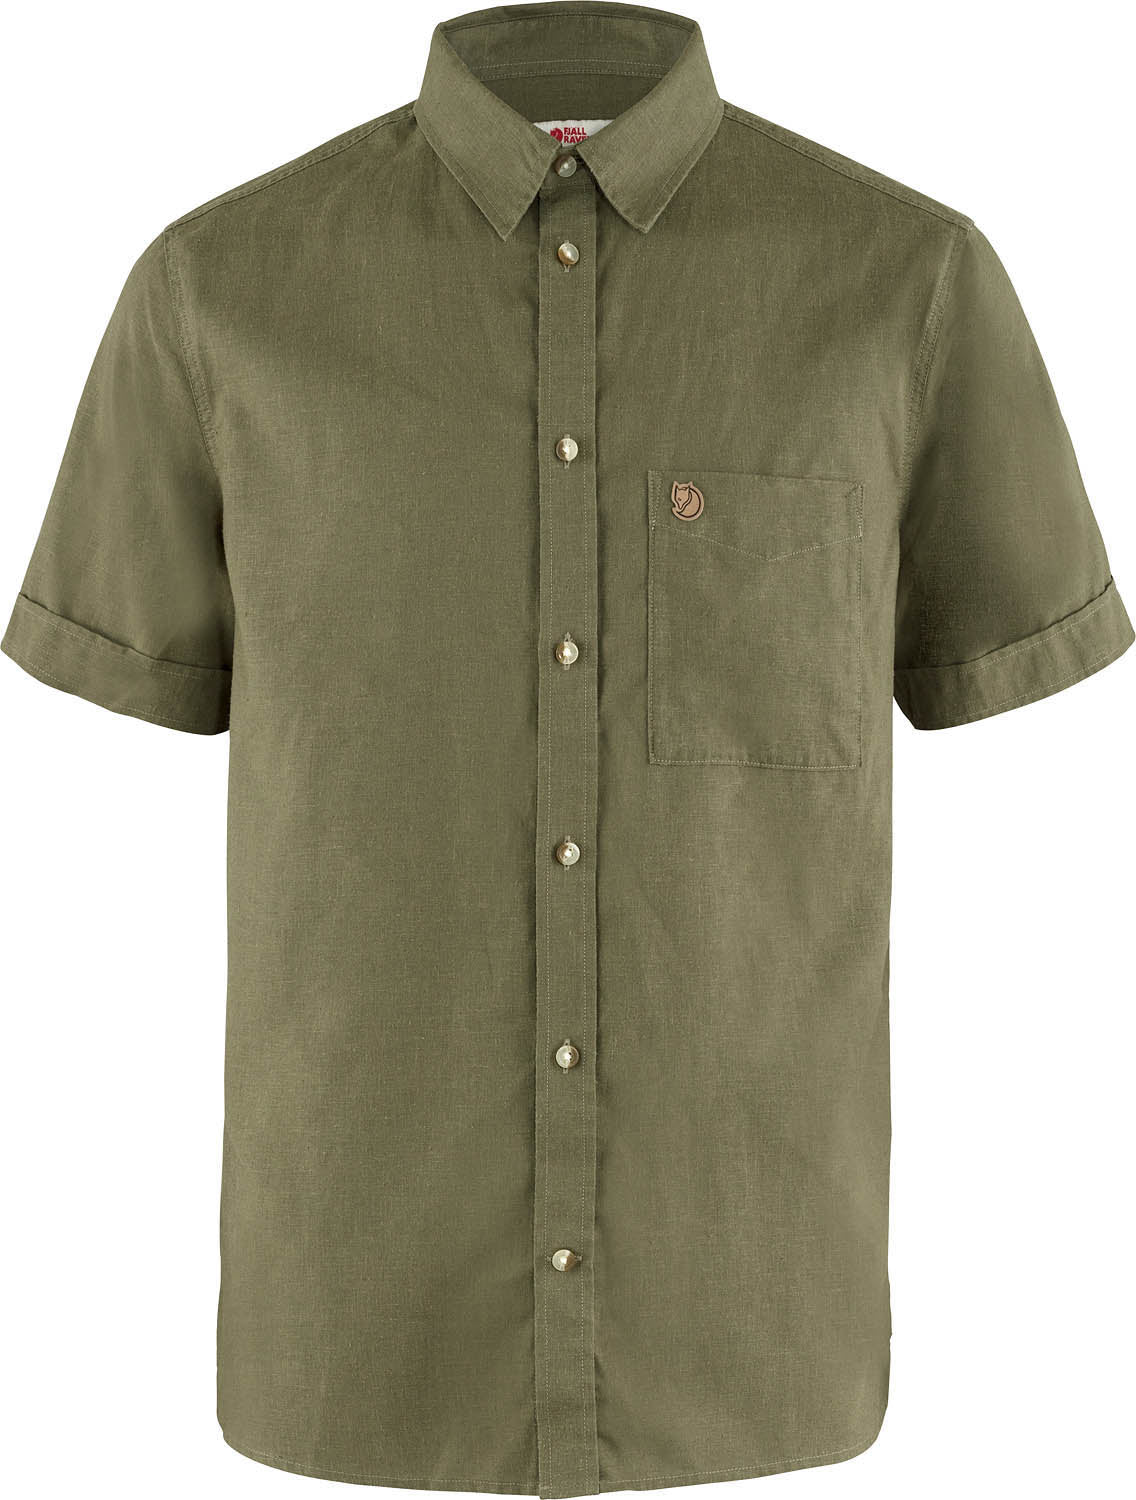 Fjallraven Abisko Trekking Shirt - Men's Patina Green Medium